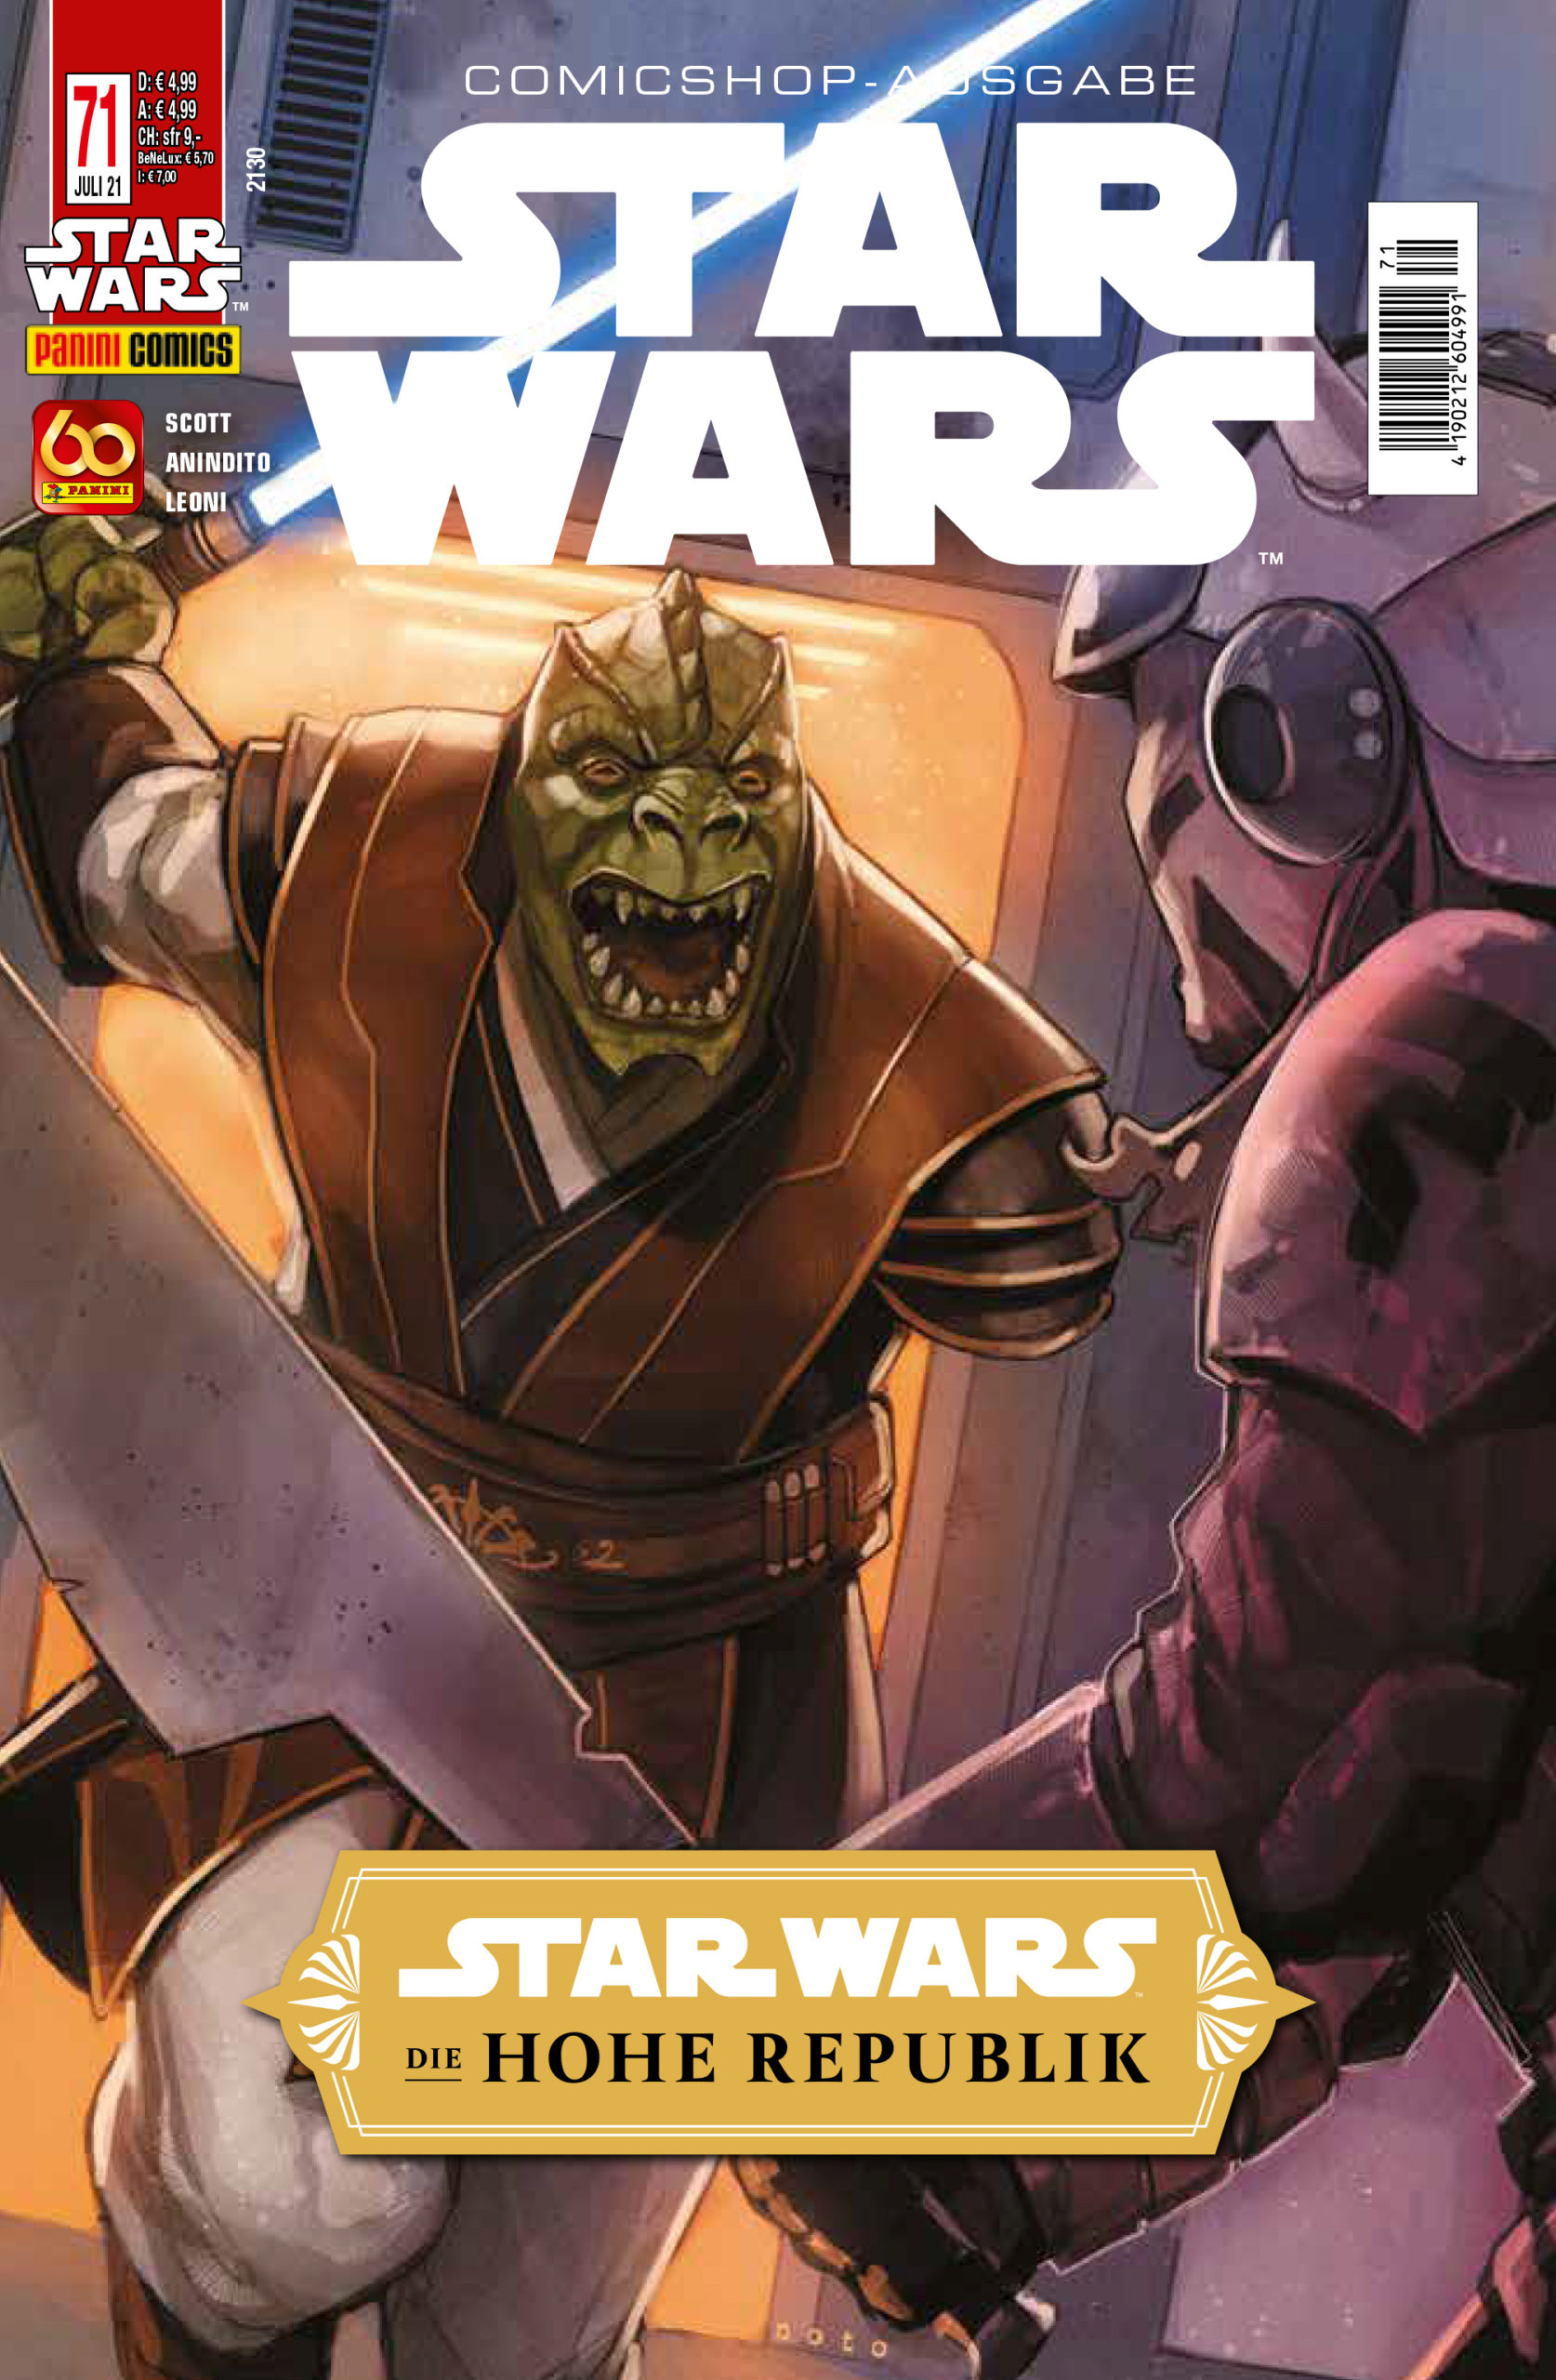 Star Wars #71 (Comicshop-Ausgabe) (16.06.2021)